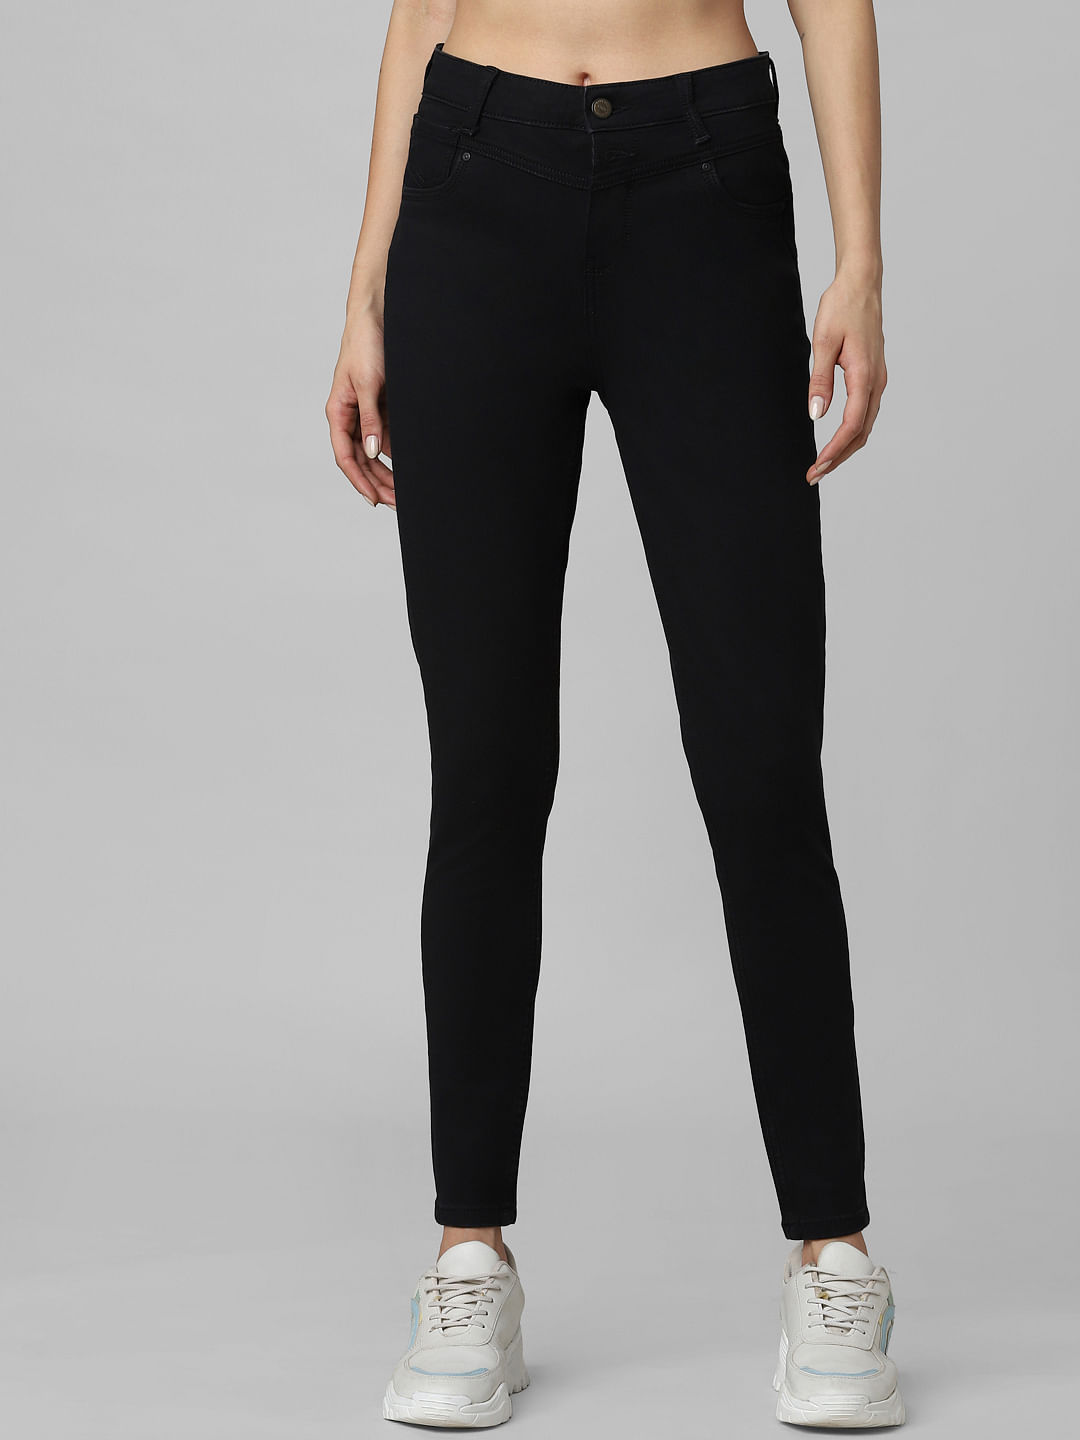 Black Pants for Women | Old Navy